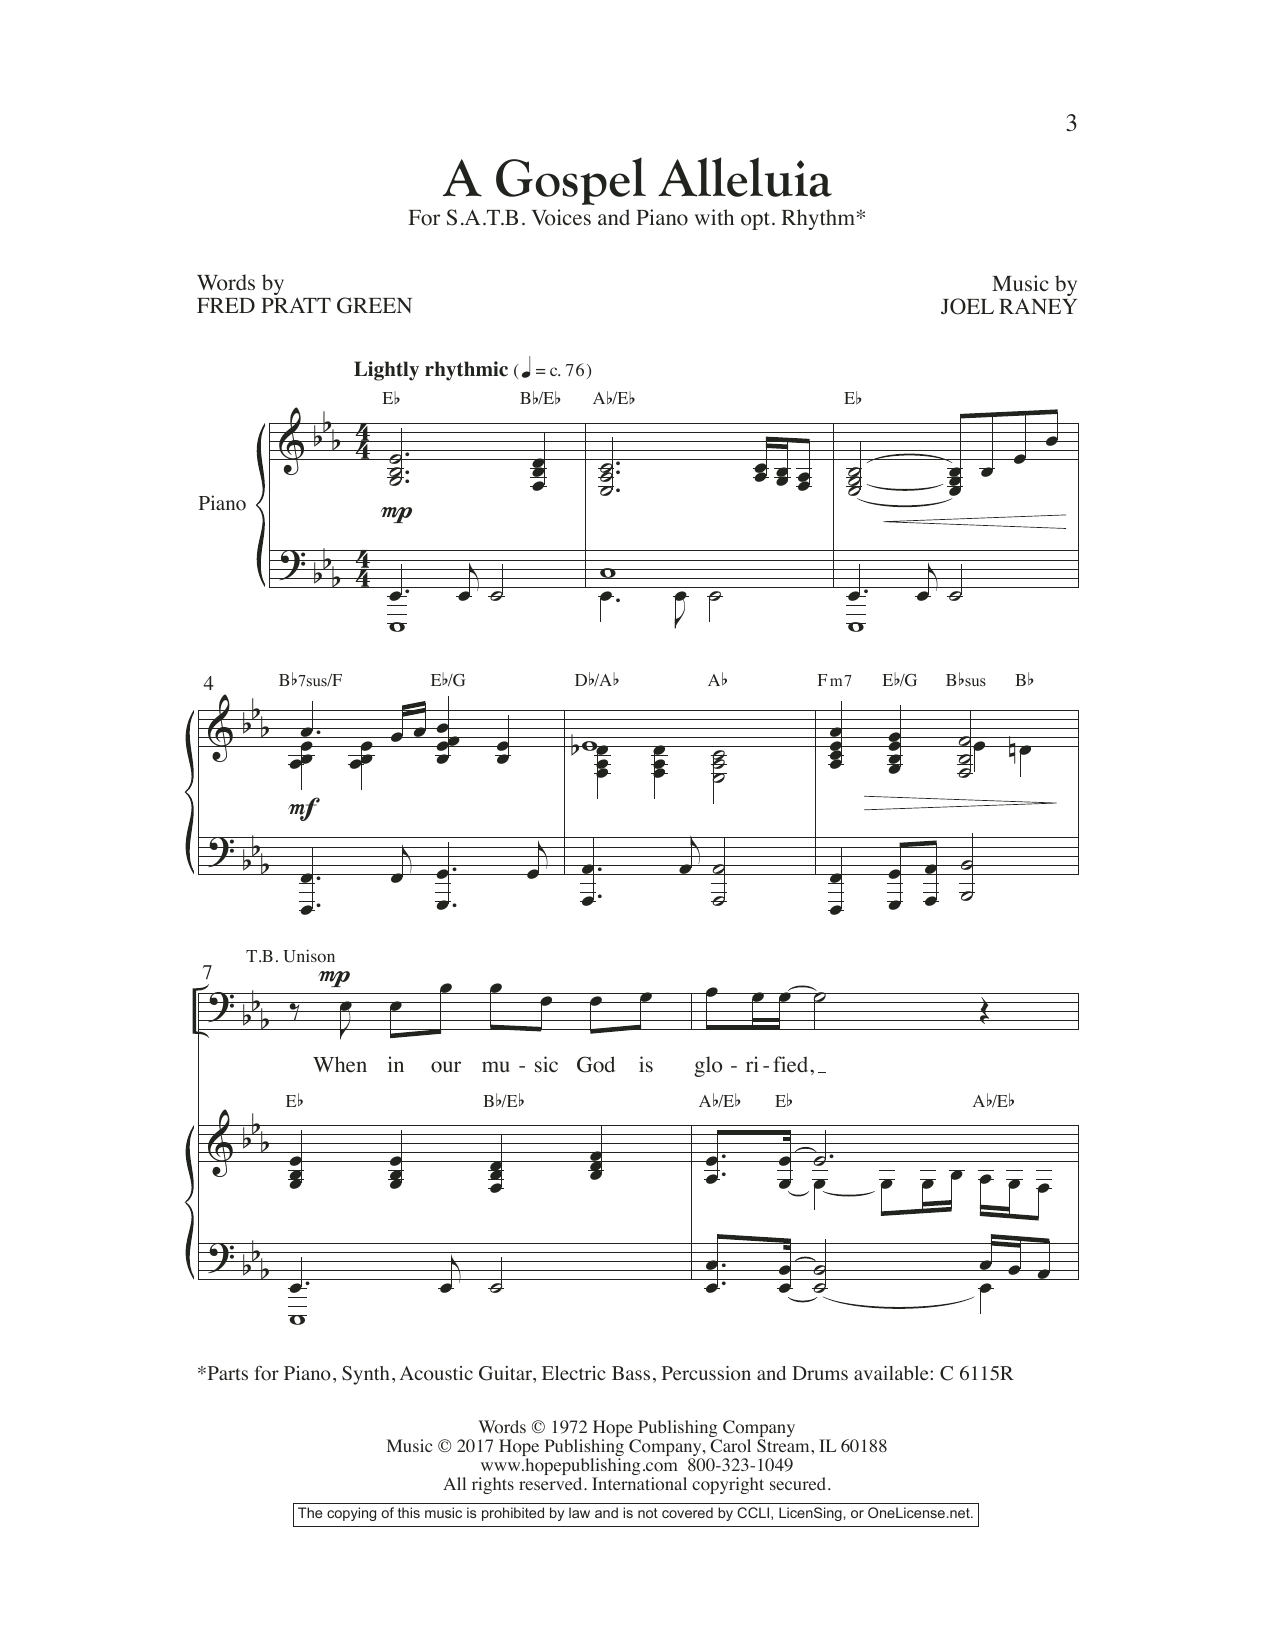 Joel Raney A Gospel Alleluia Sheet Music Notes & Chords for Choir - Download or Print PDF